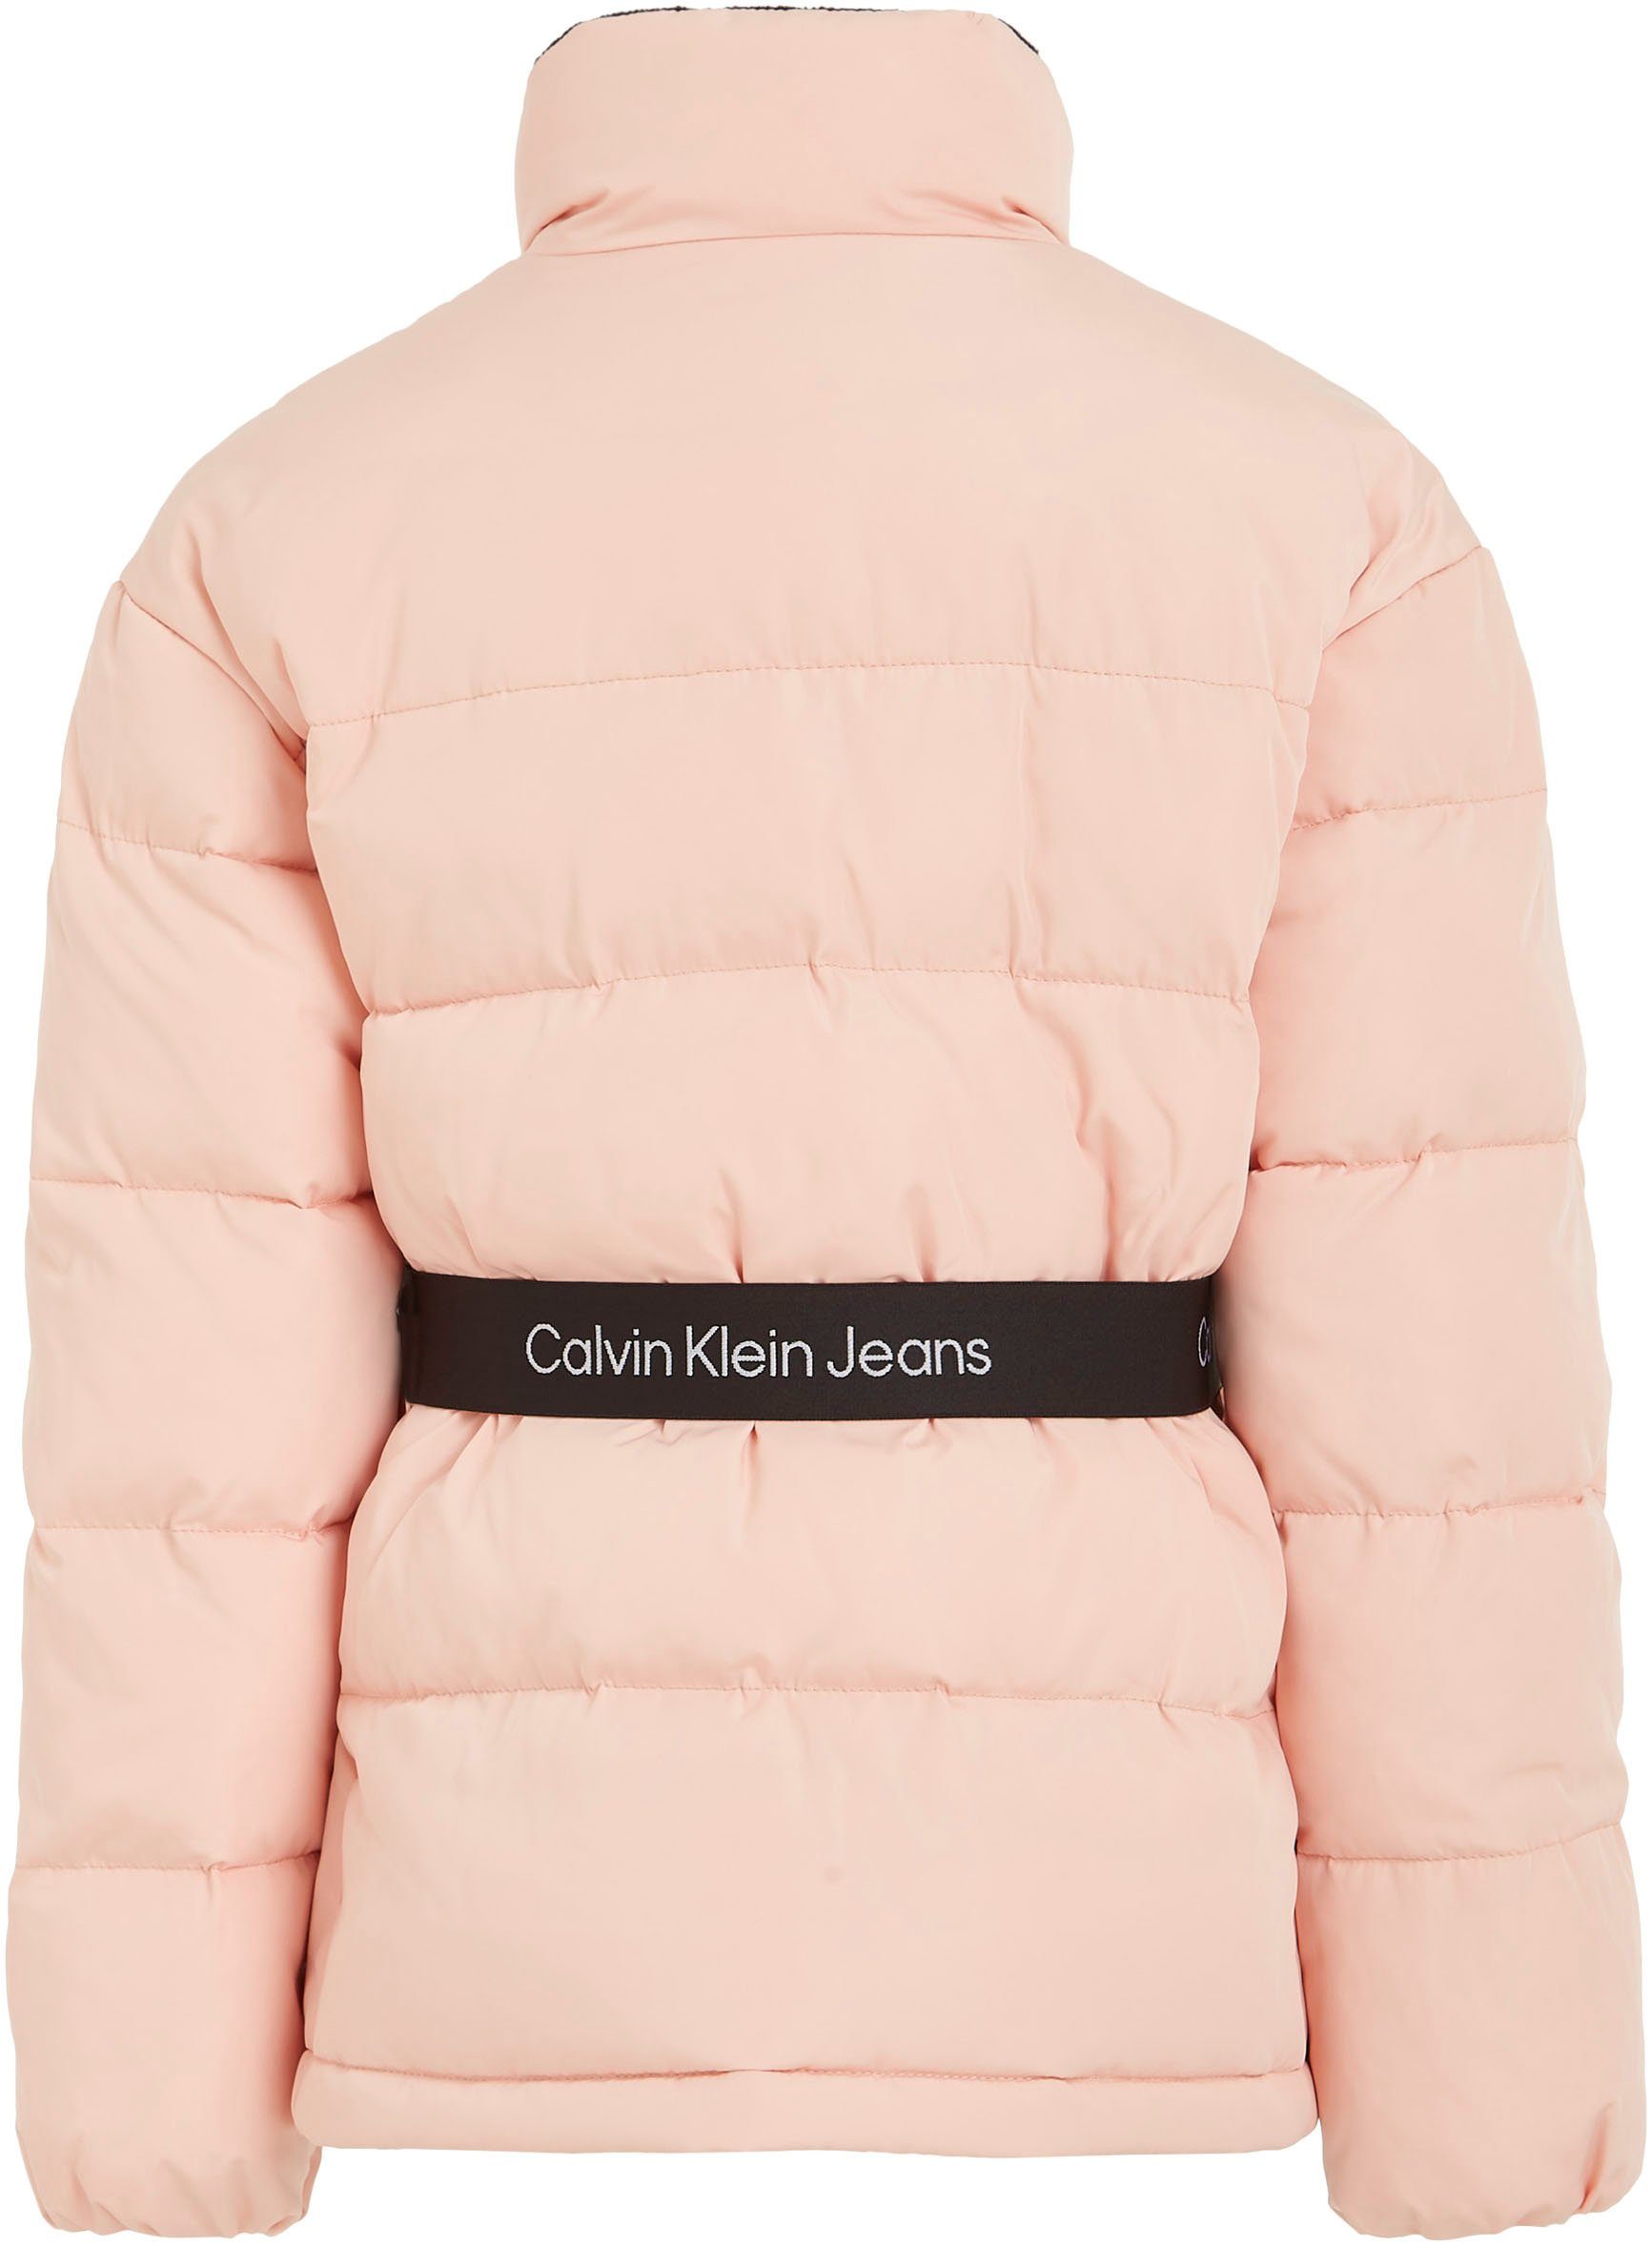 Calvin Klein Jeans Winterjacke JACKET BELT Faint TAPE LOGO Blossom